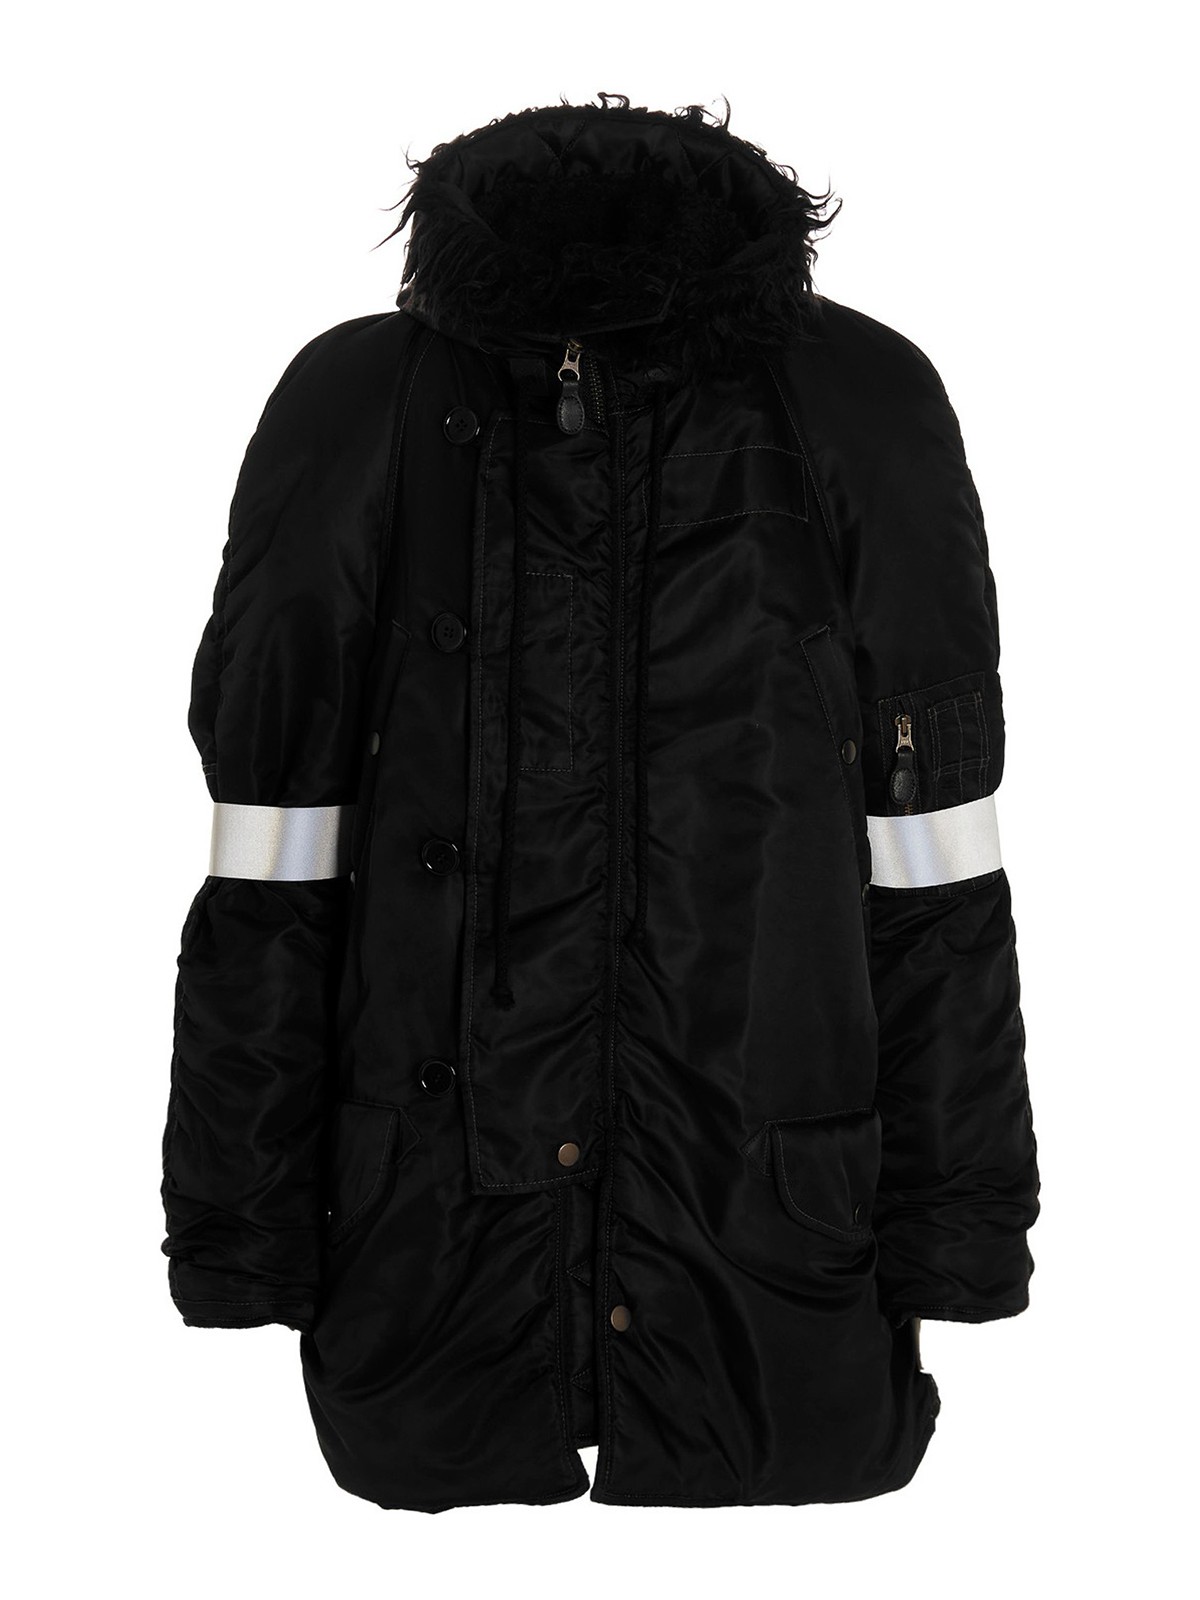 Black Reflective Hooded Puffer Jacket